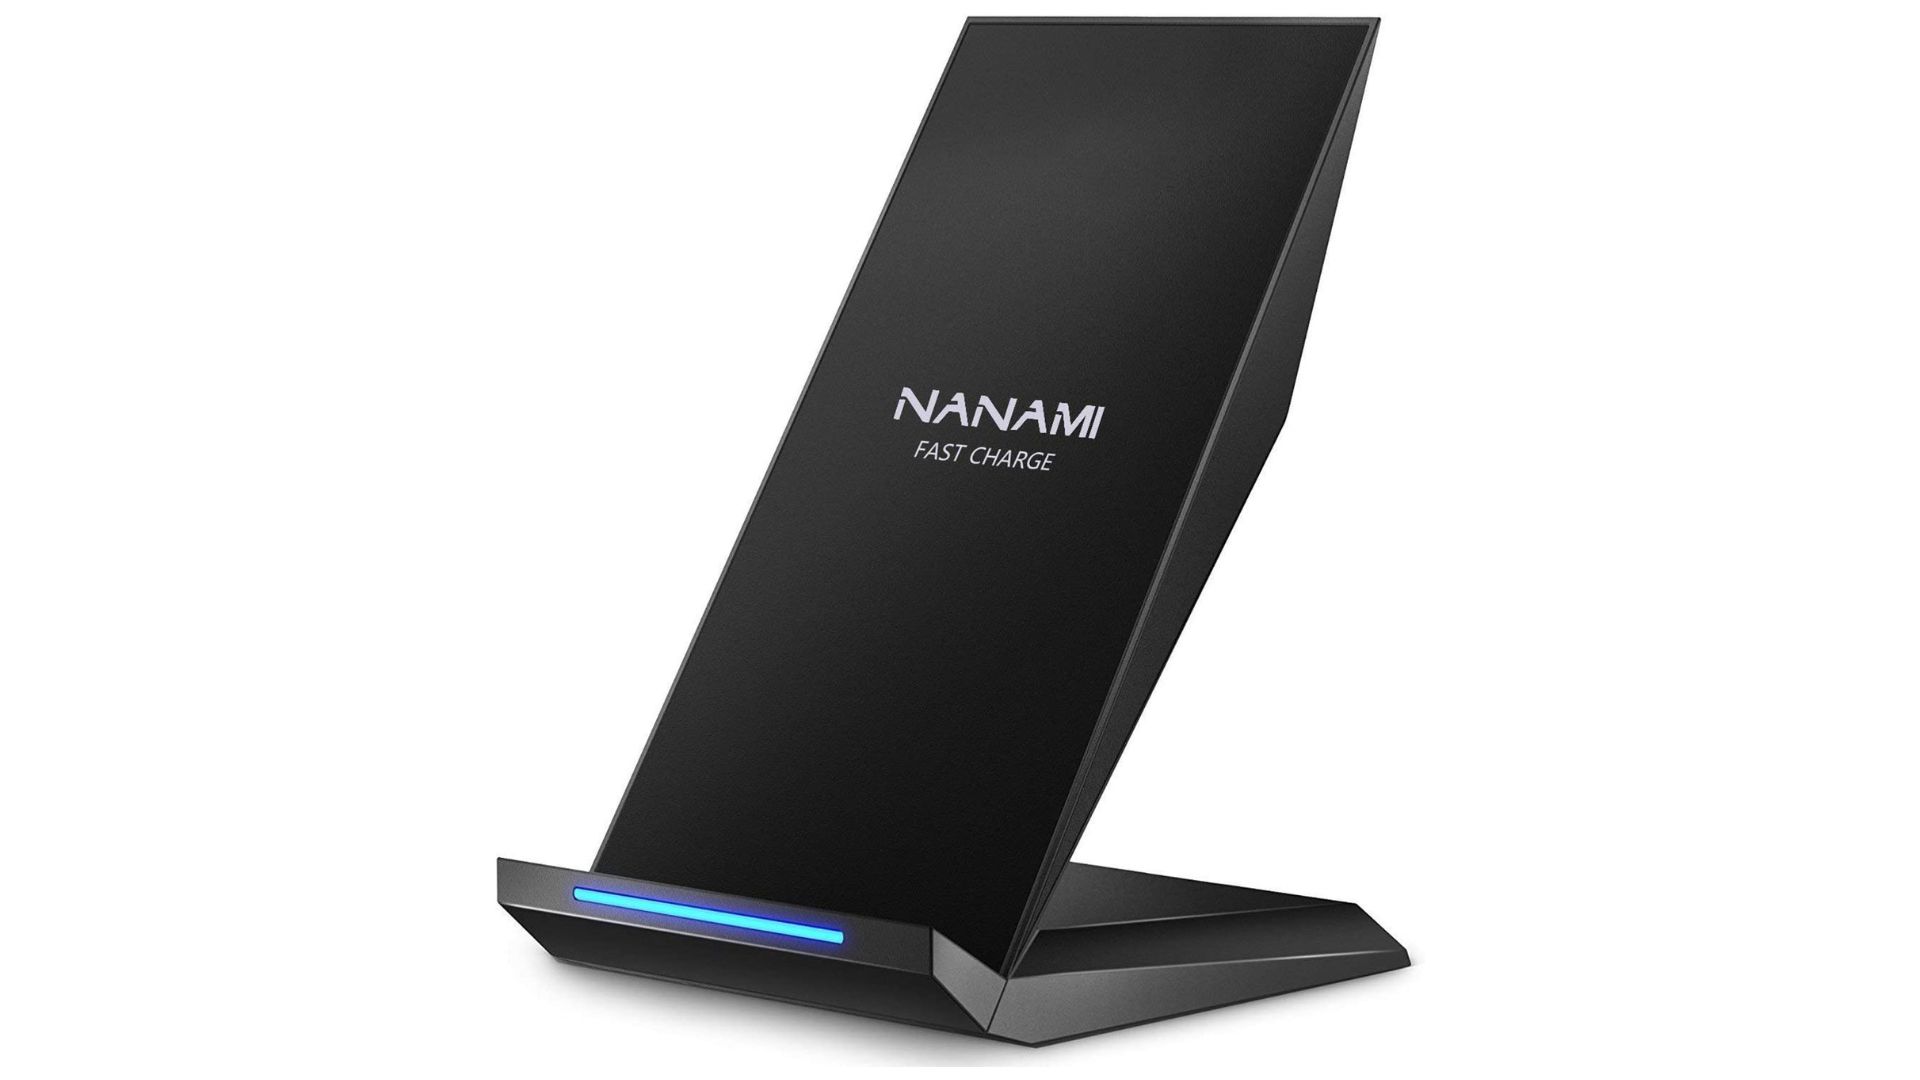 Nanami wireless charger